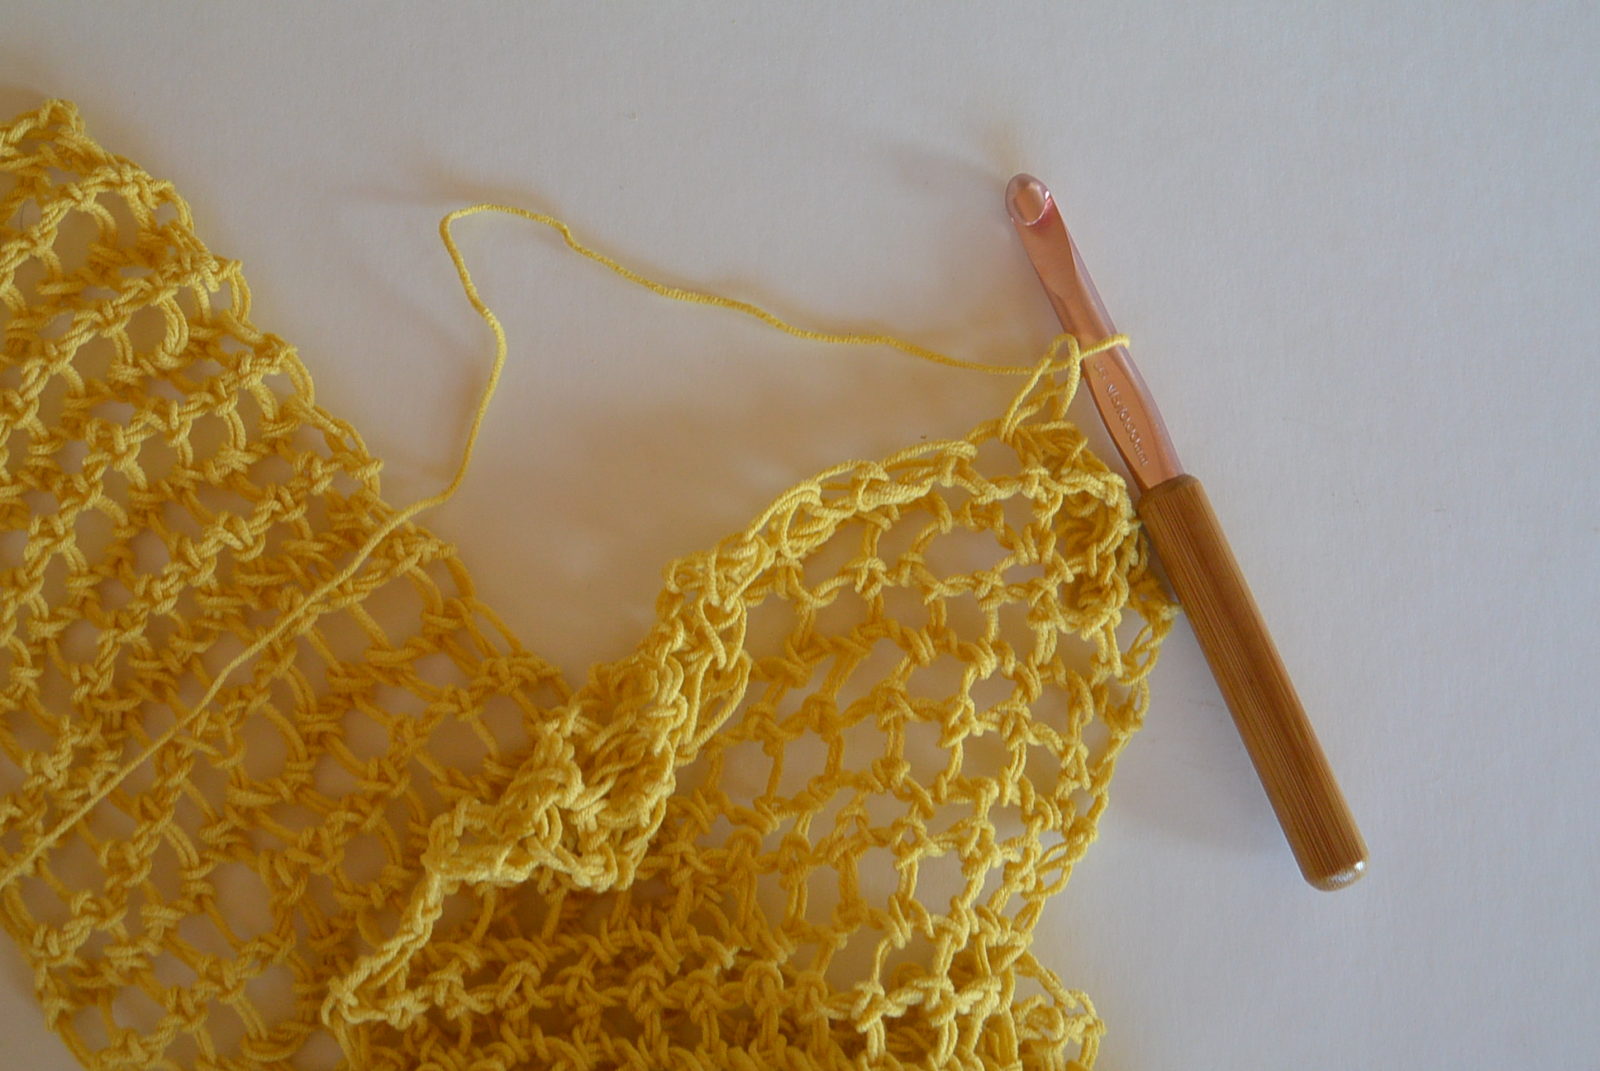 Pretty Chunky Crochet Scarf Pattern – Mama In A Stitch